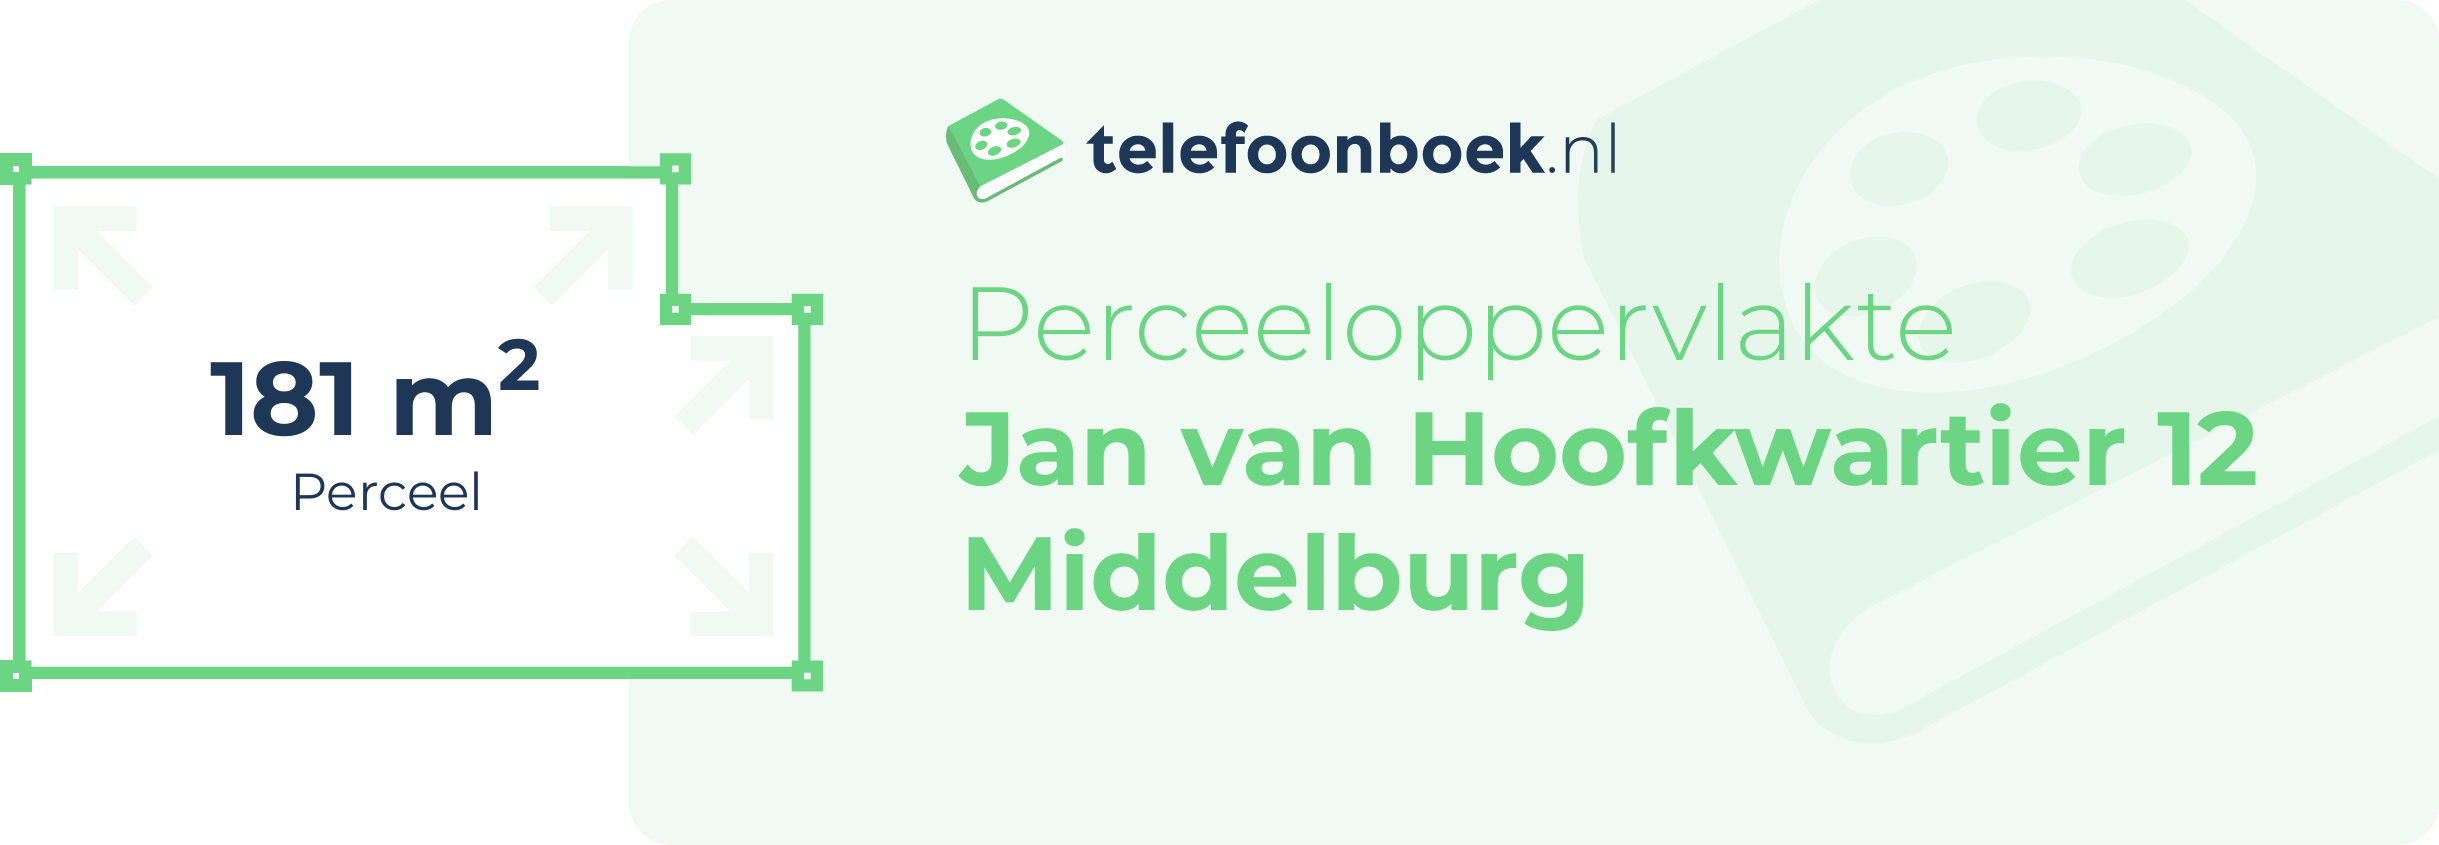 Perceeloppervlakte Jan Van Hoofkwartier 12 Middelburg